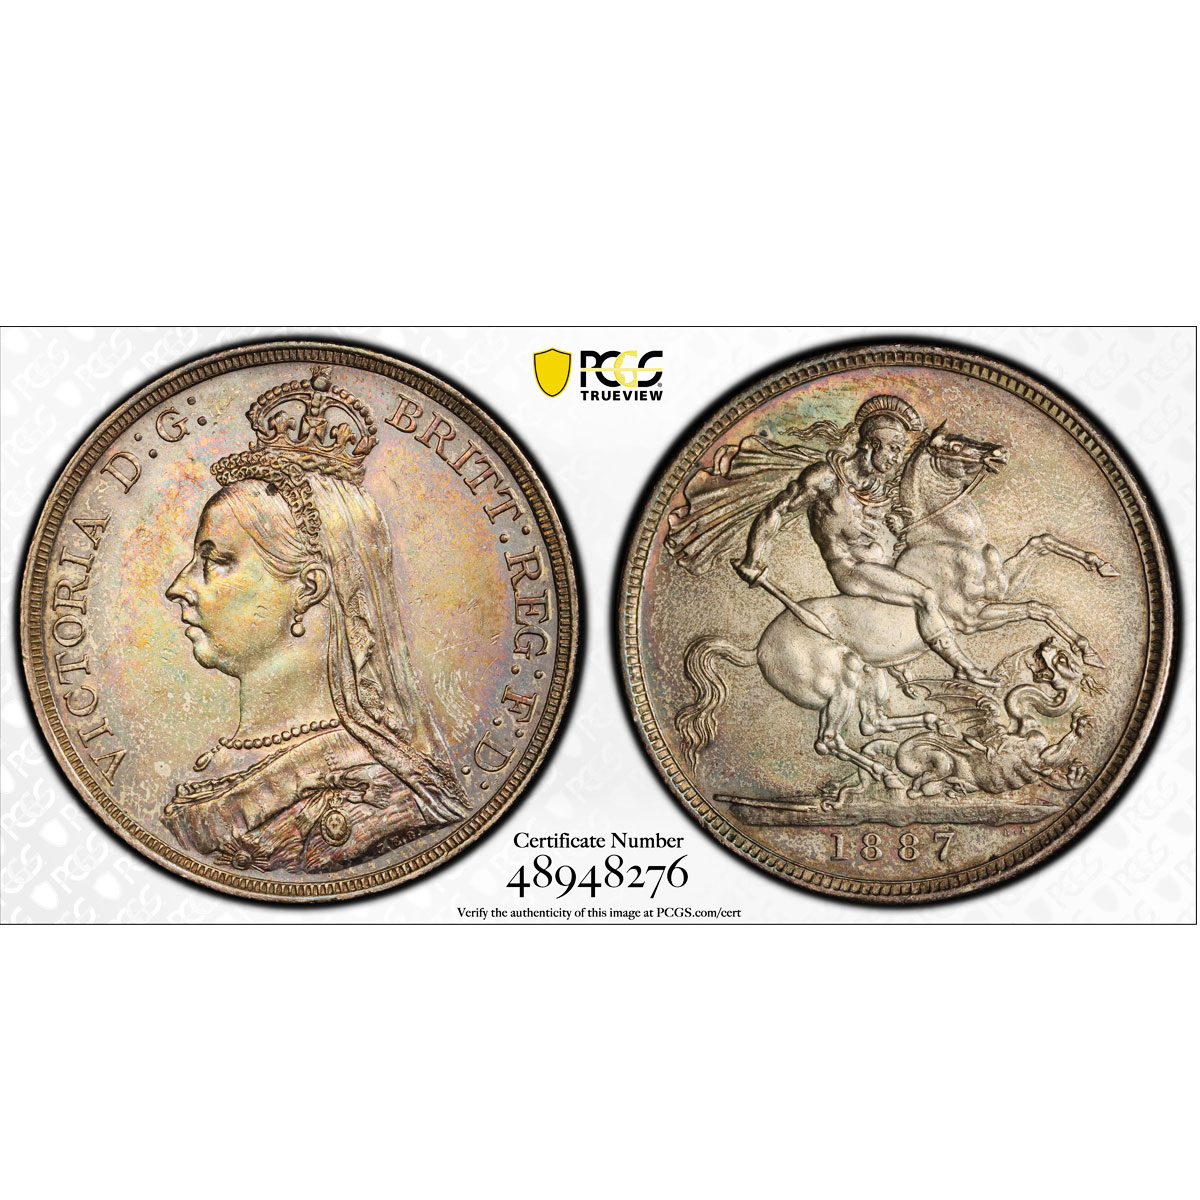 Great Britain 1 crown Queen Victoria St George KM-765 AU PCGS silver coin 1887